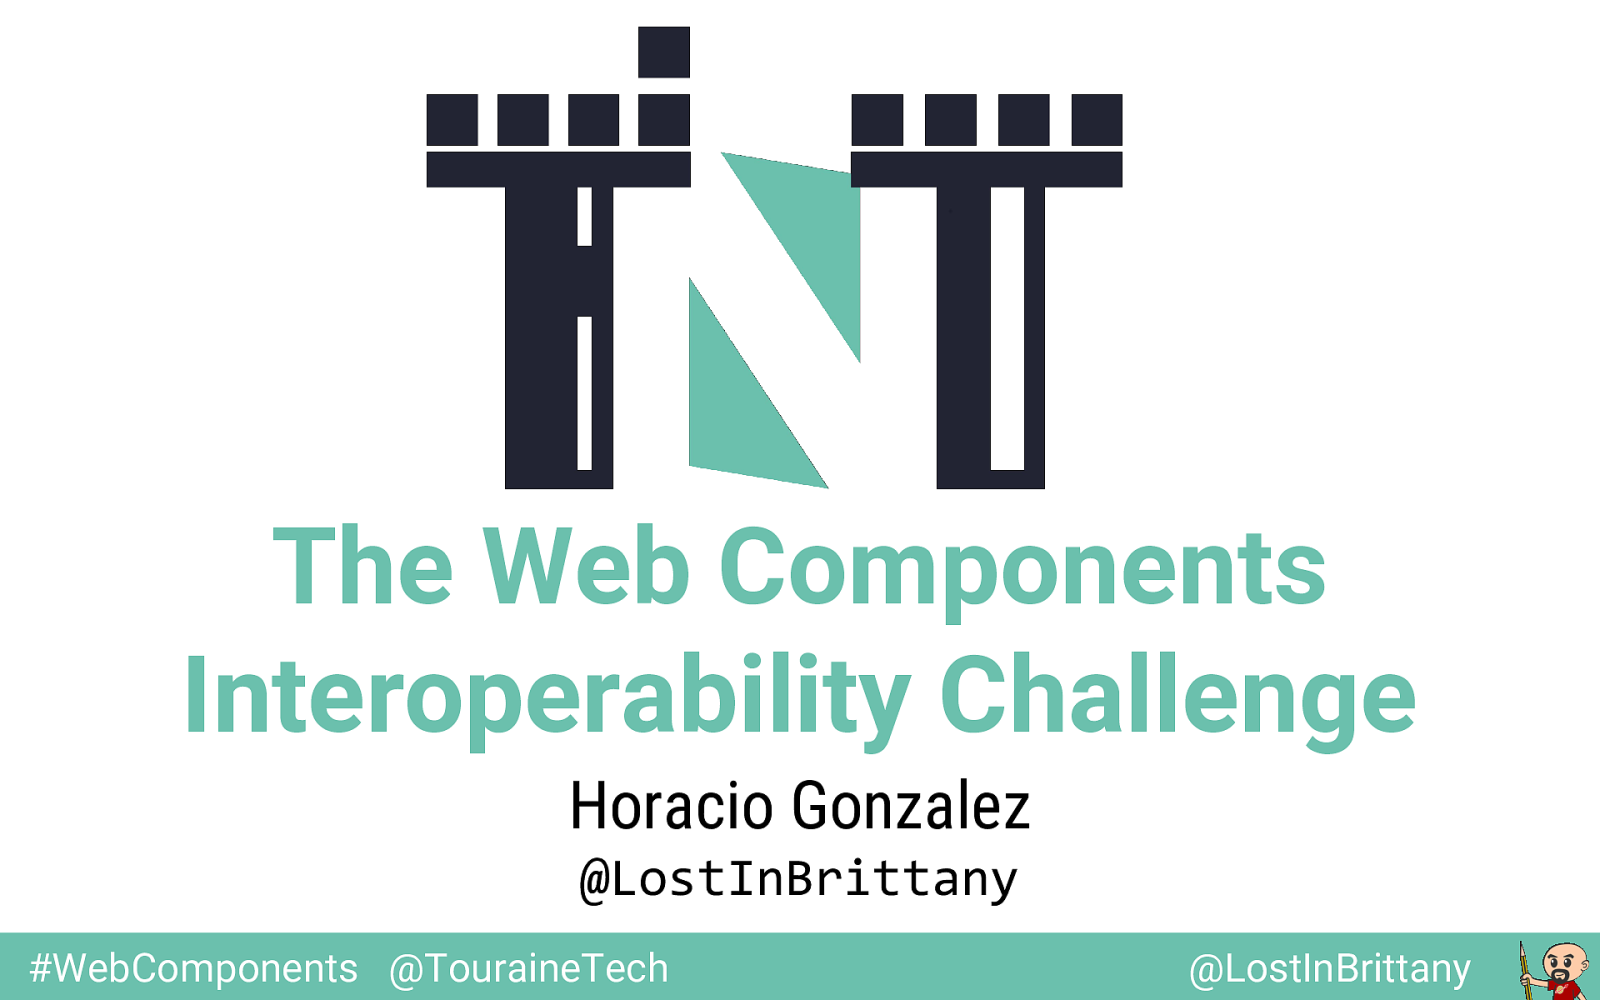 The Web Components interoperability challenge